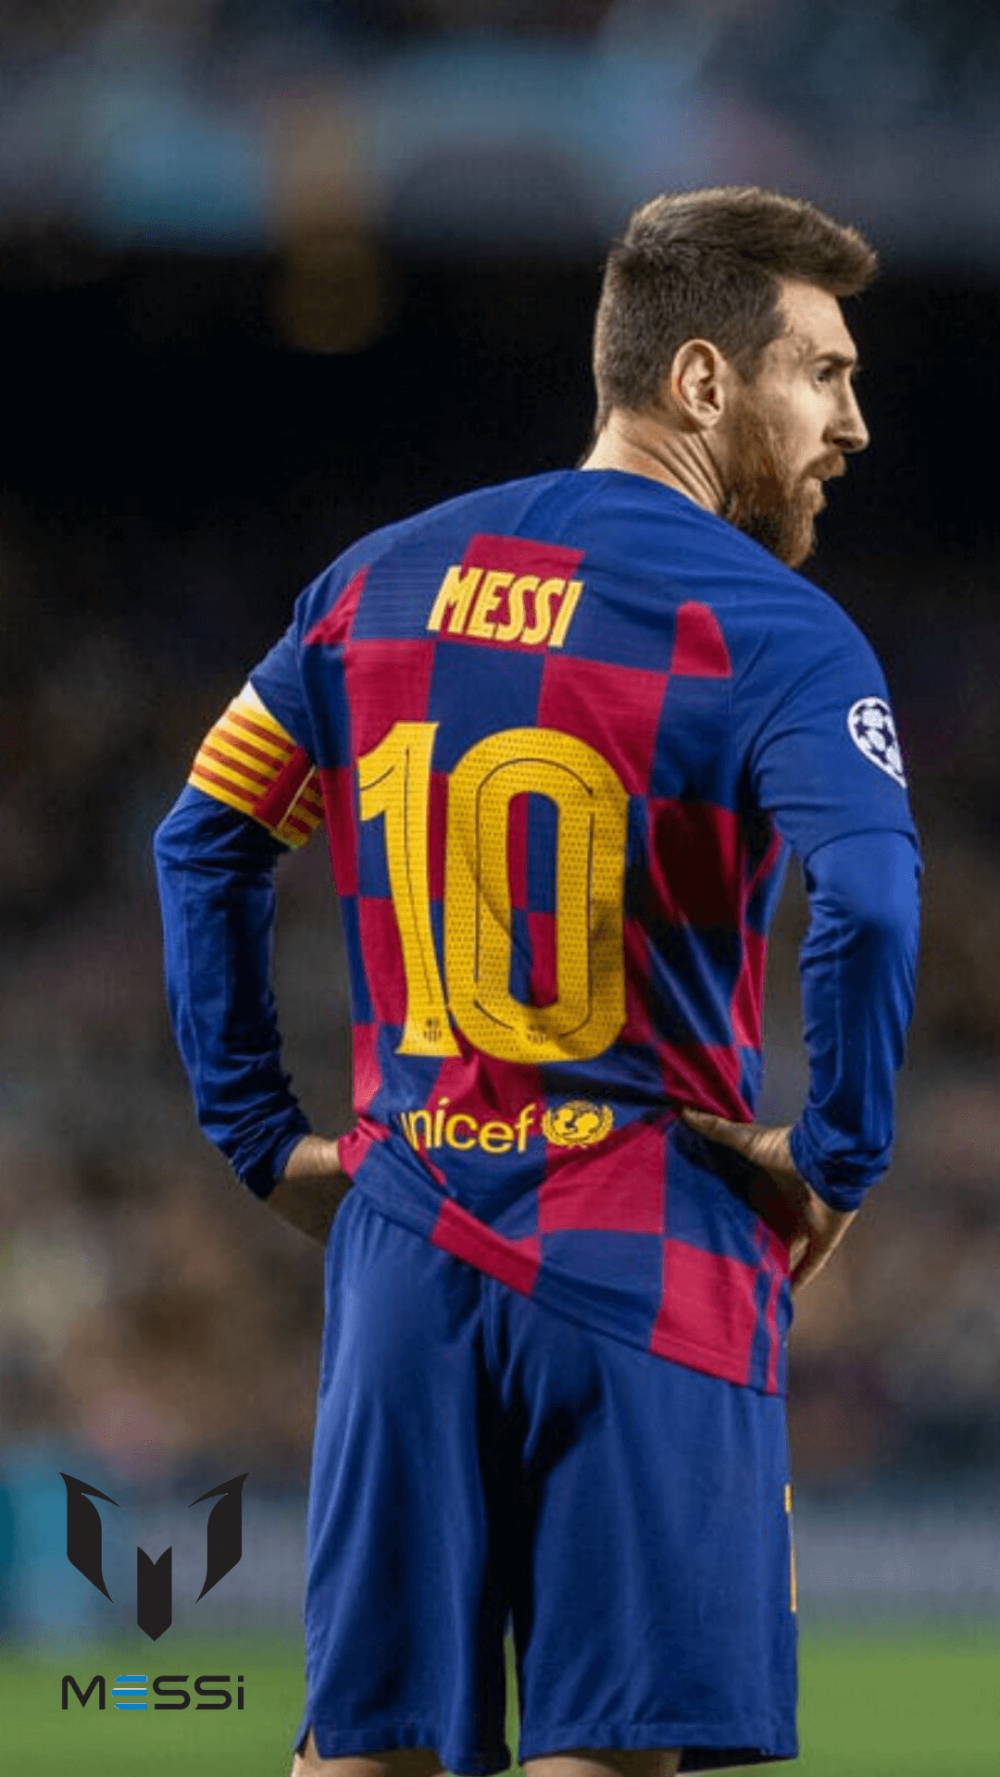 Messi 2020 4k Mobile Wallpaper. Lionel messi, Messi